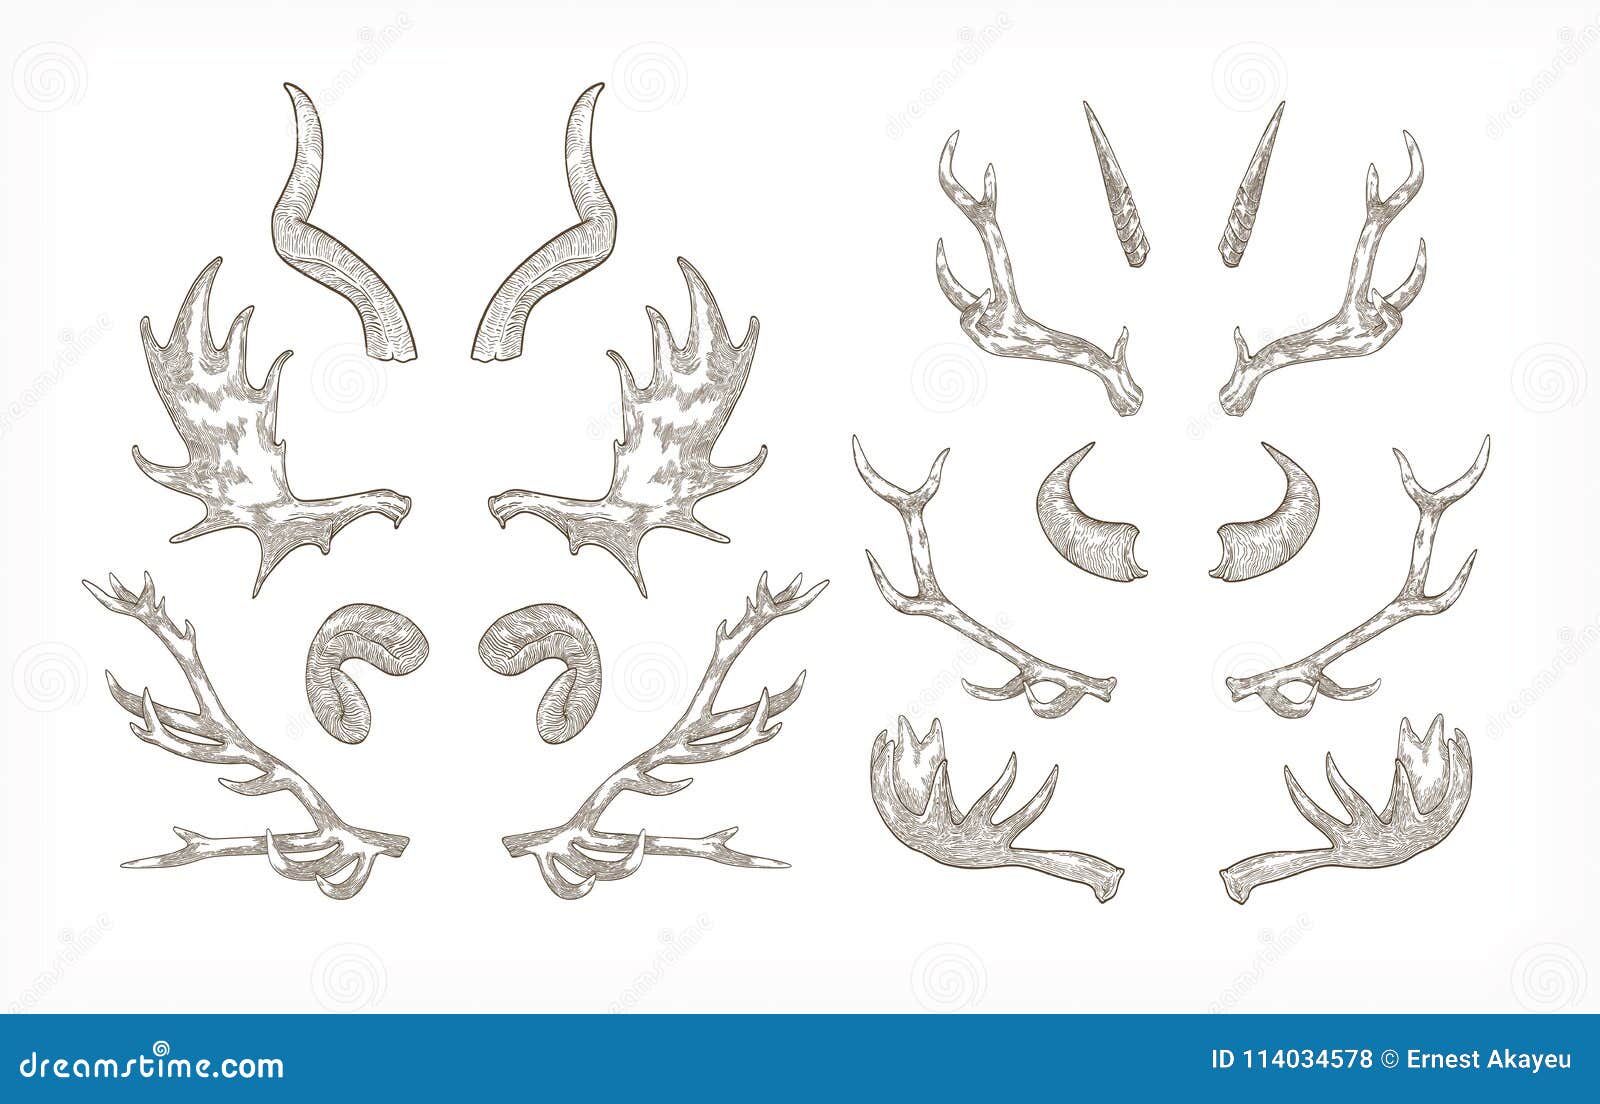 collection of horns of various animals  on white background - ram, mountain goat tur, antelope, elk, bull